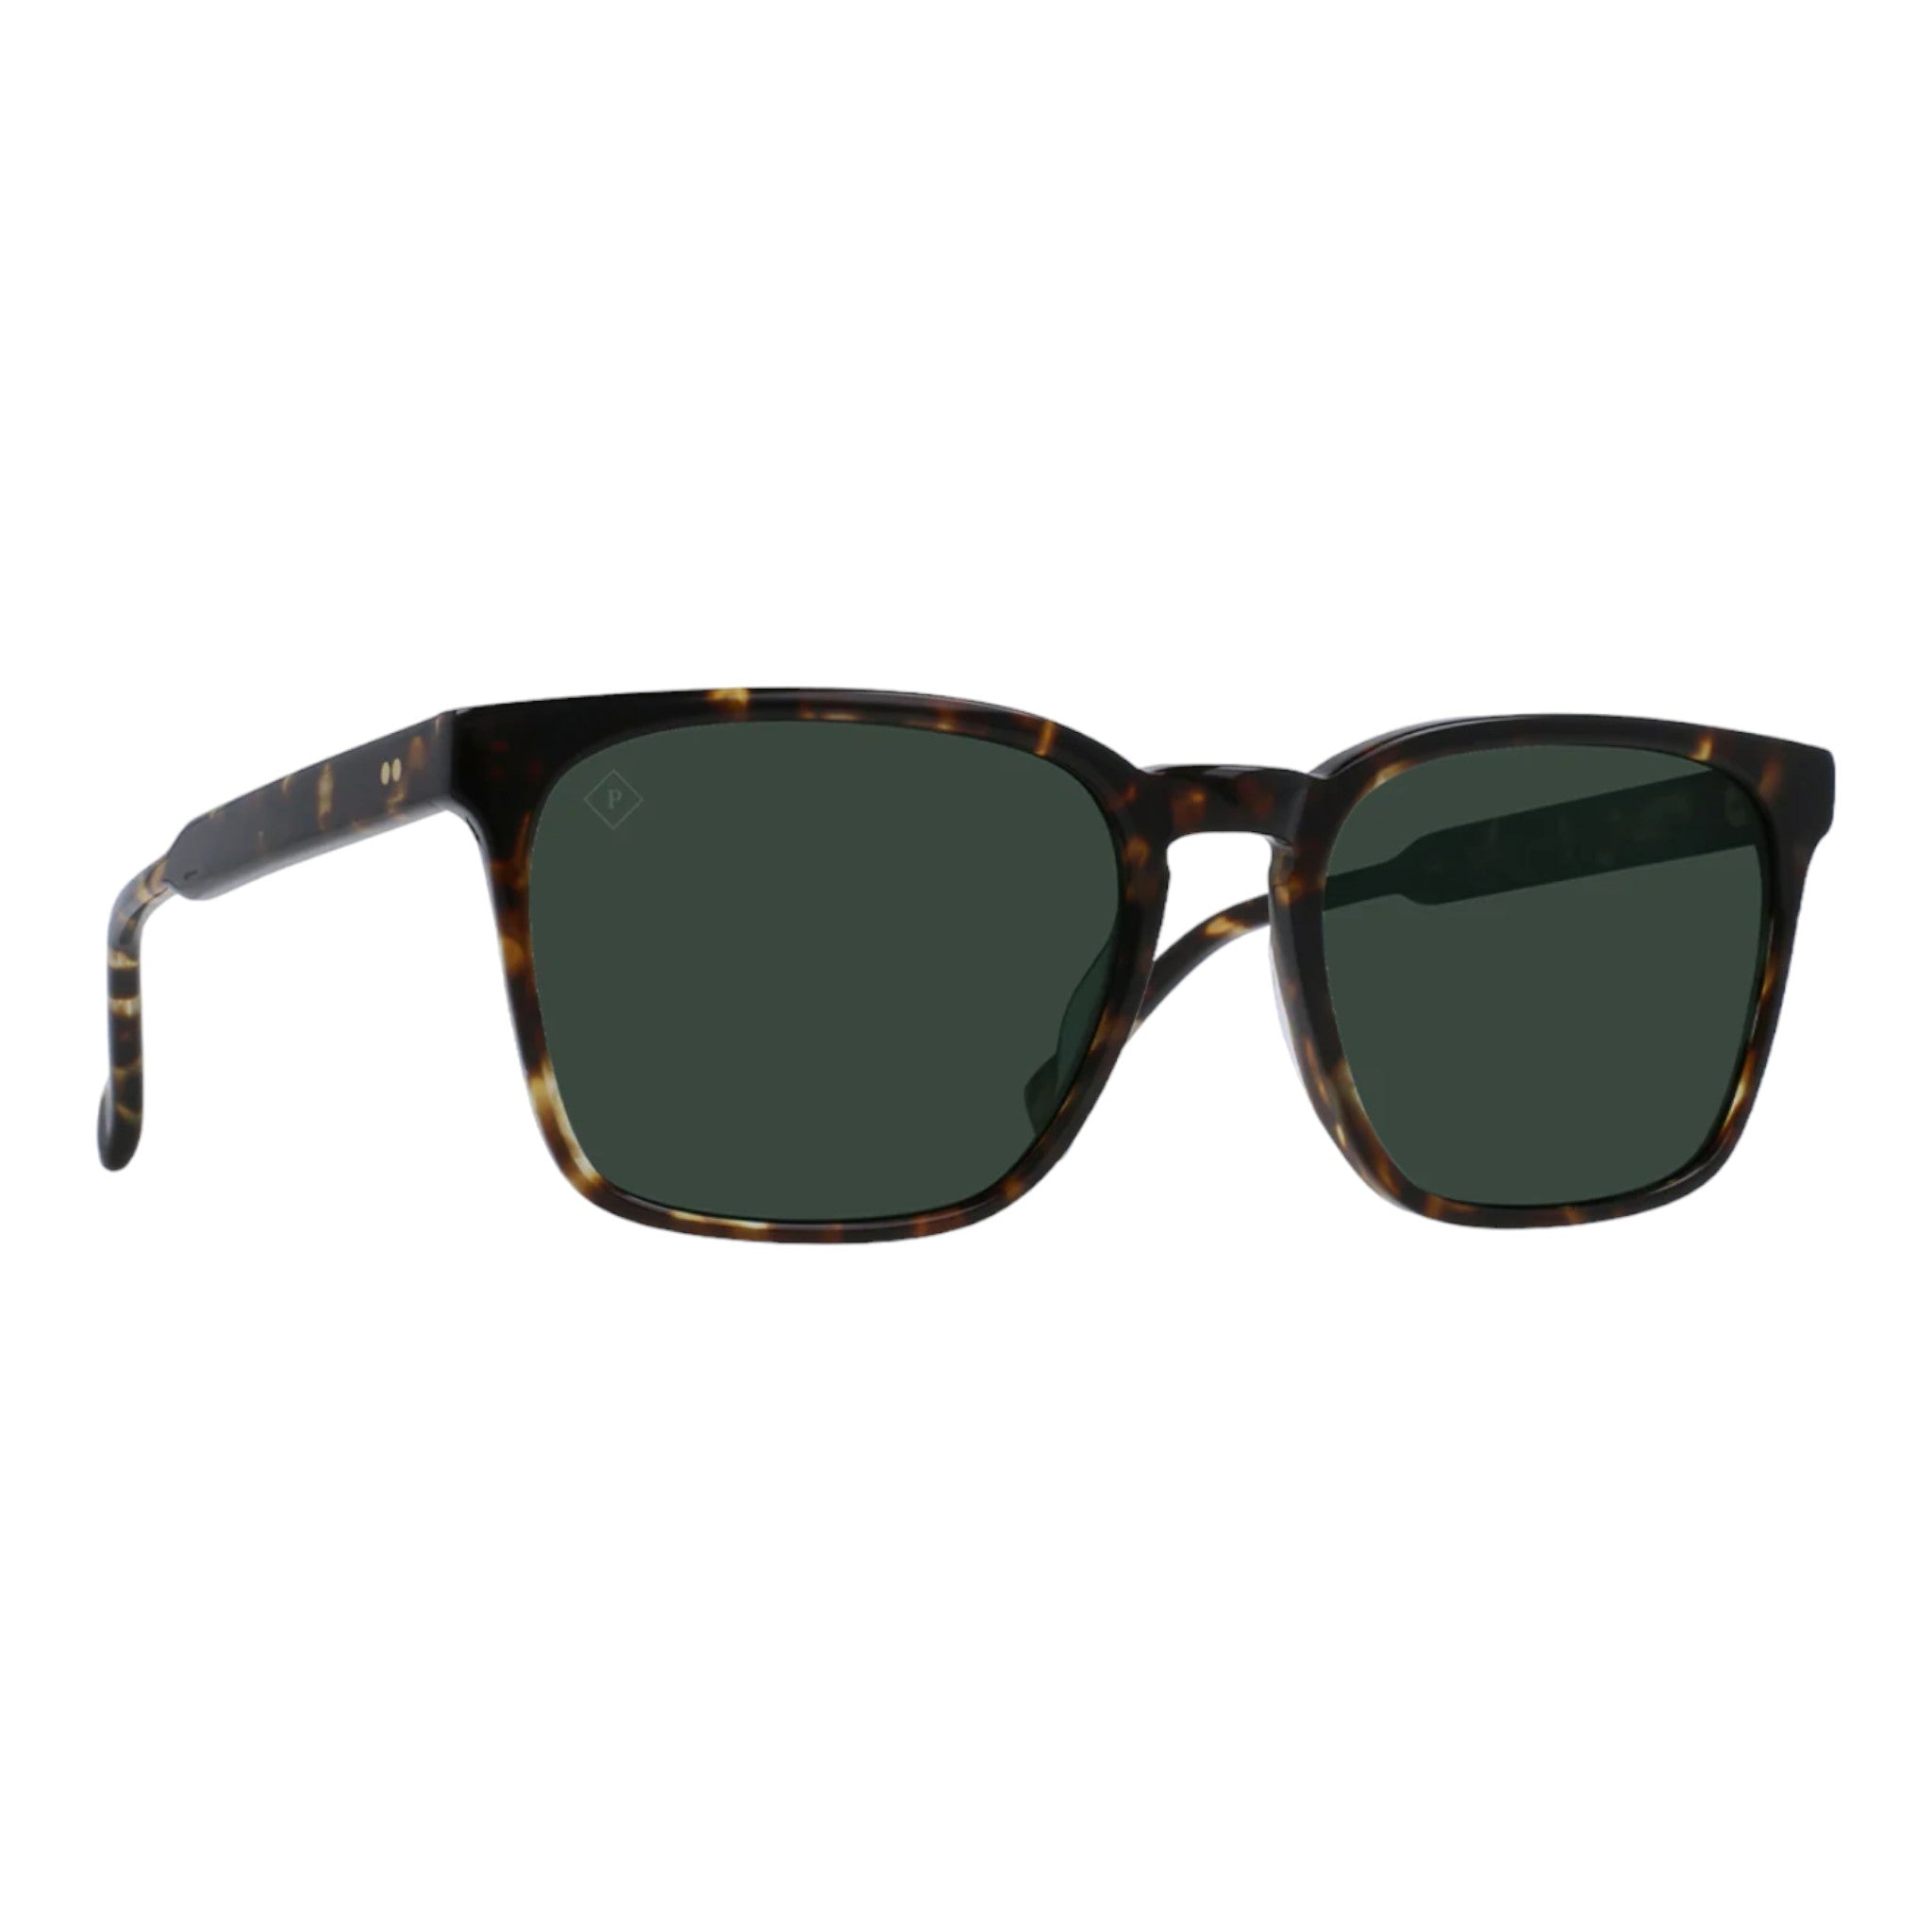 RAEN - Pierce 55 Sunglasses - Brindle Tortoise / Green Polarized